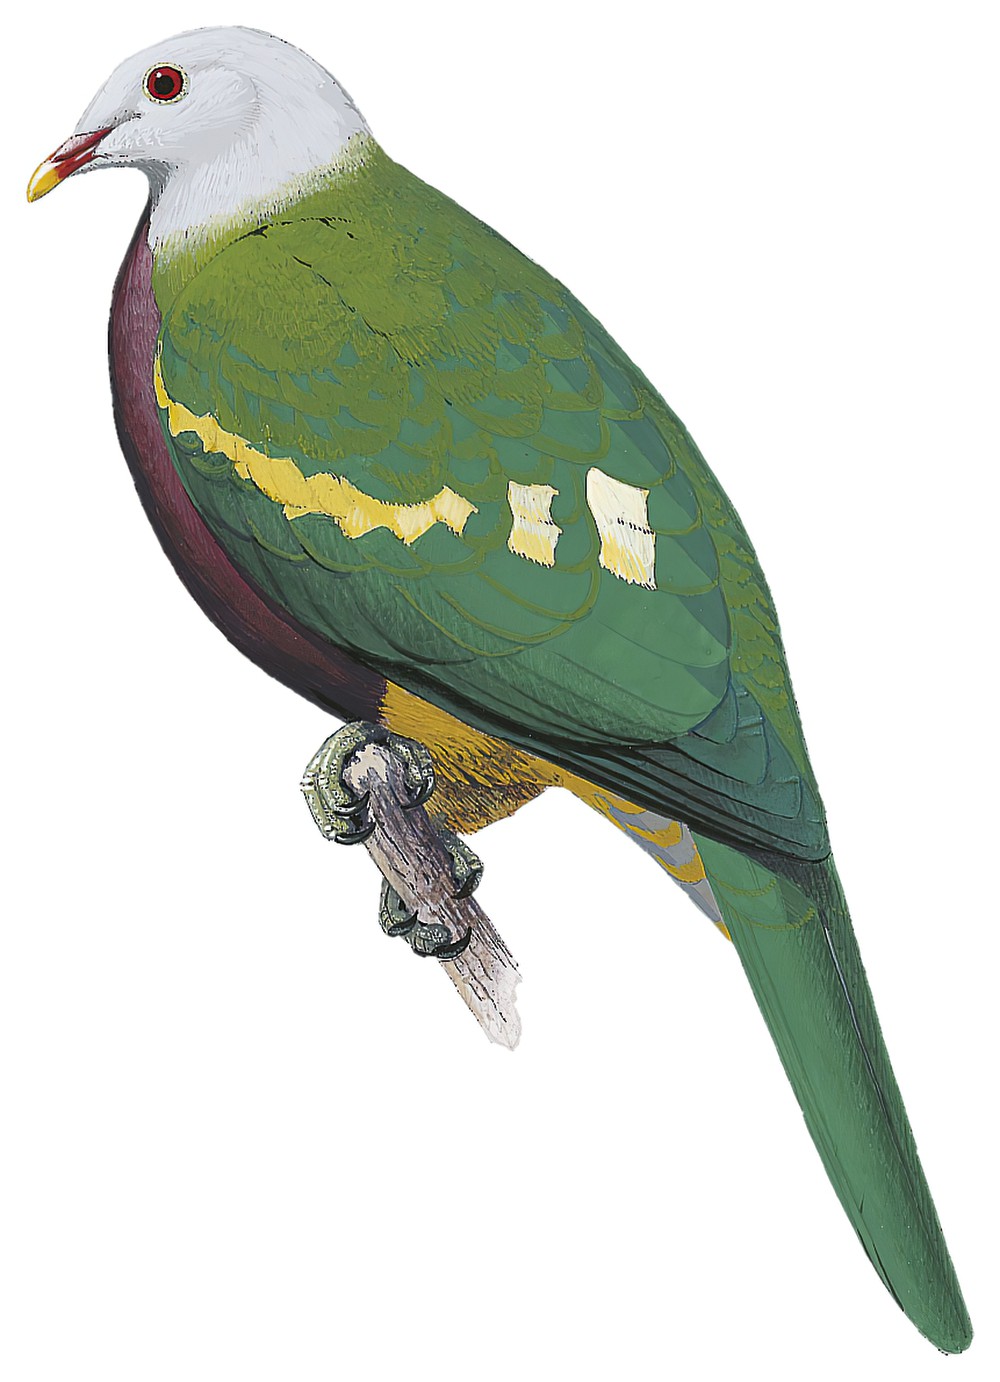 Wompoo Fruit-Dove / Ptilinopus magnificus